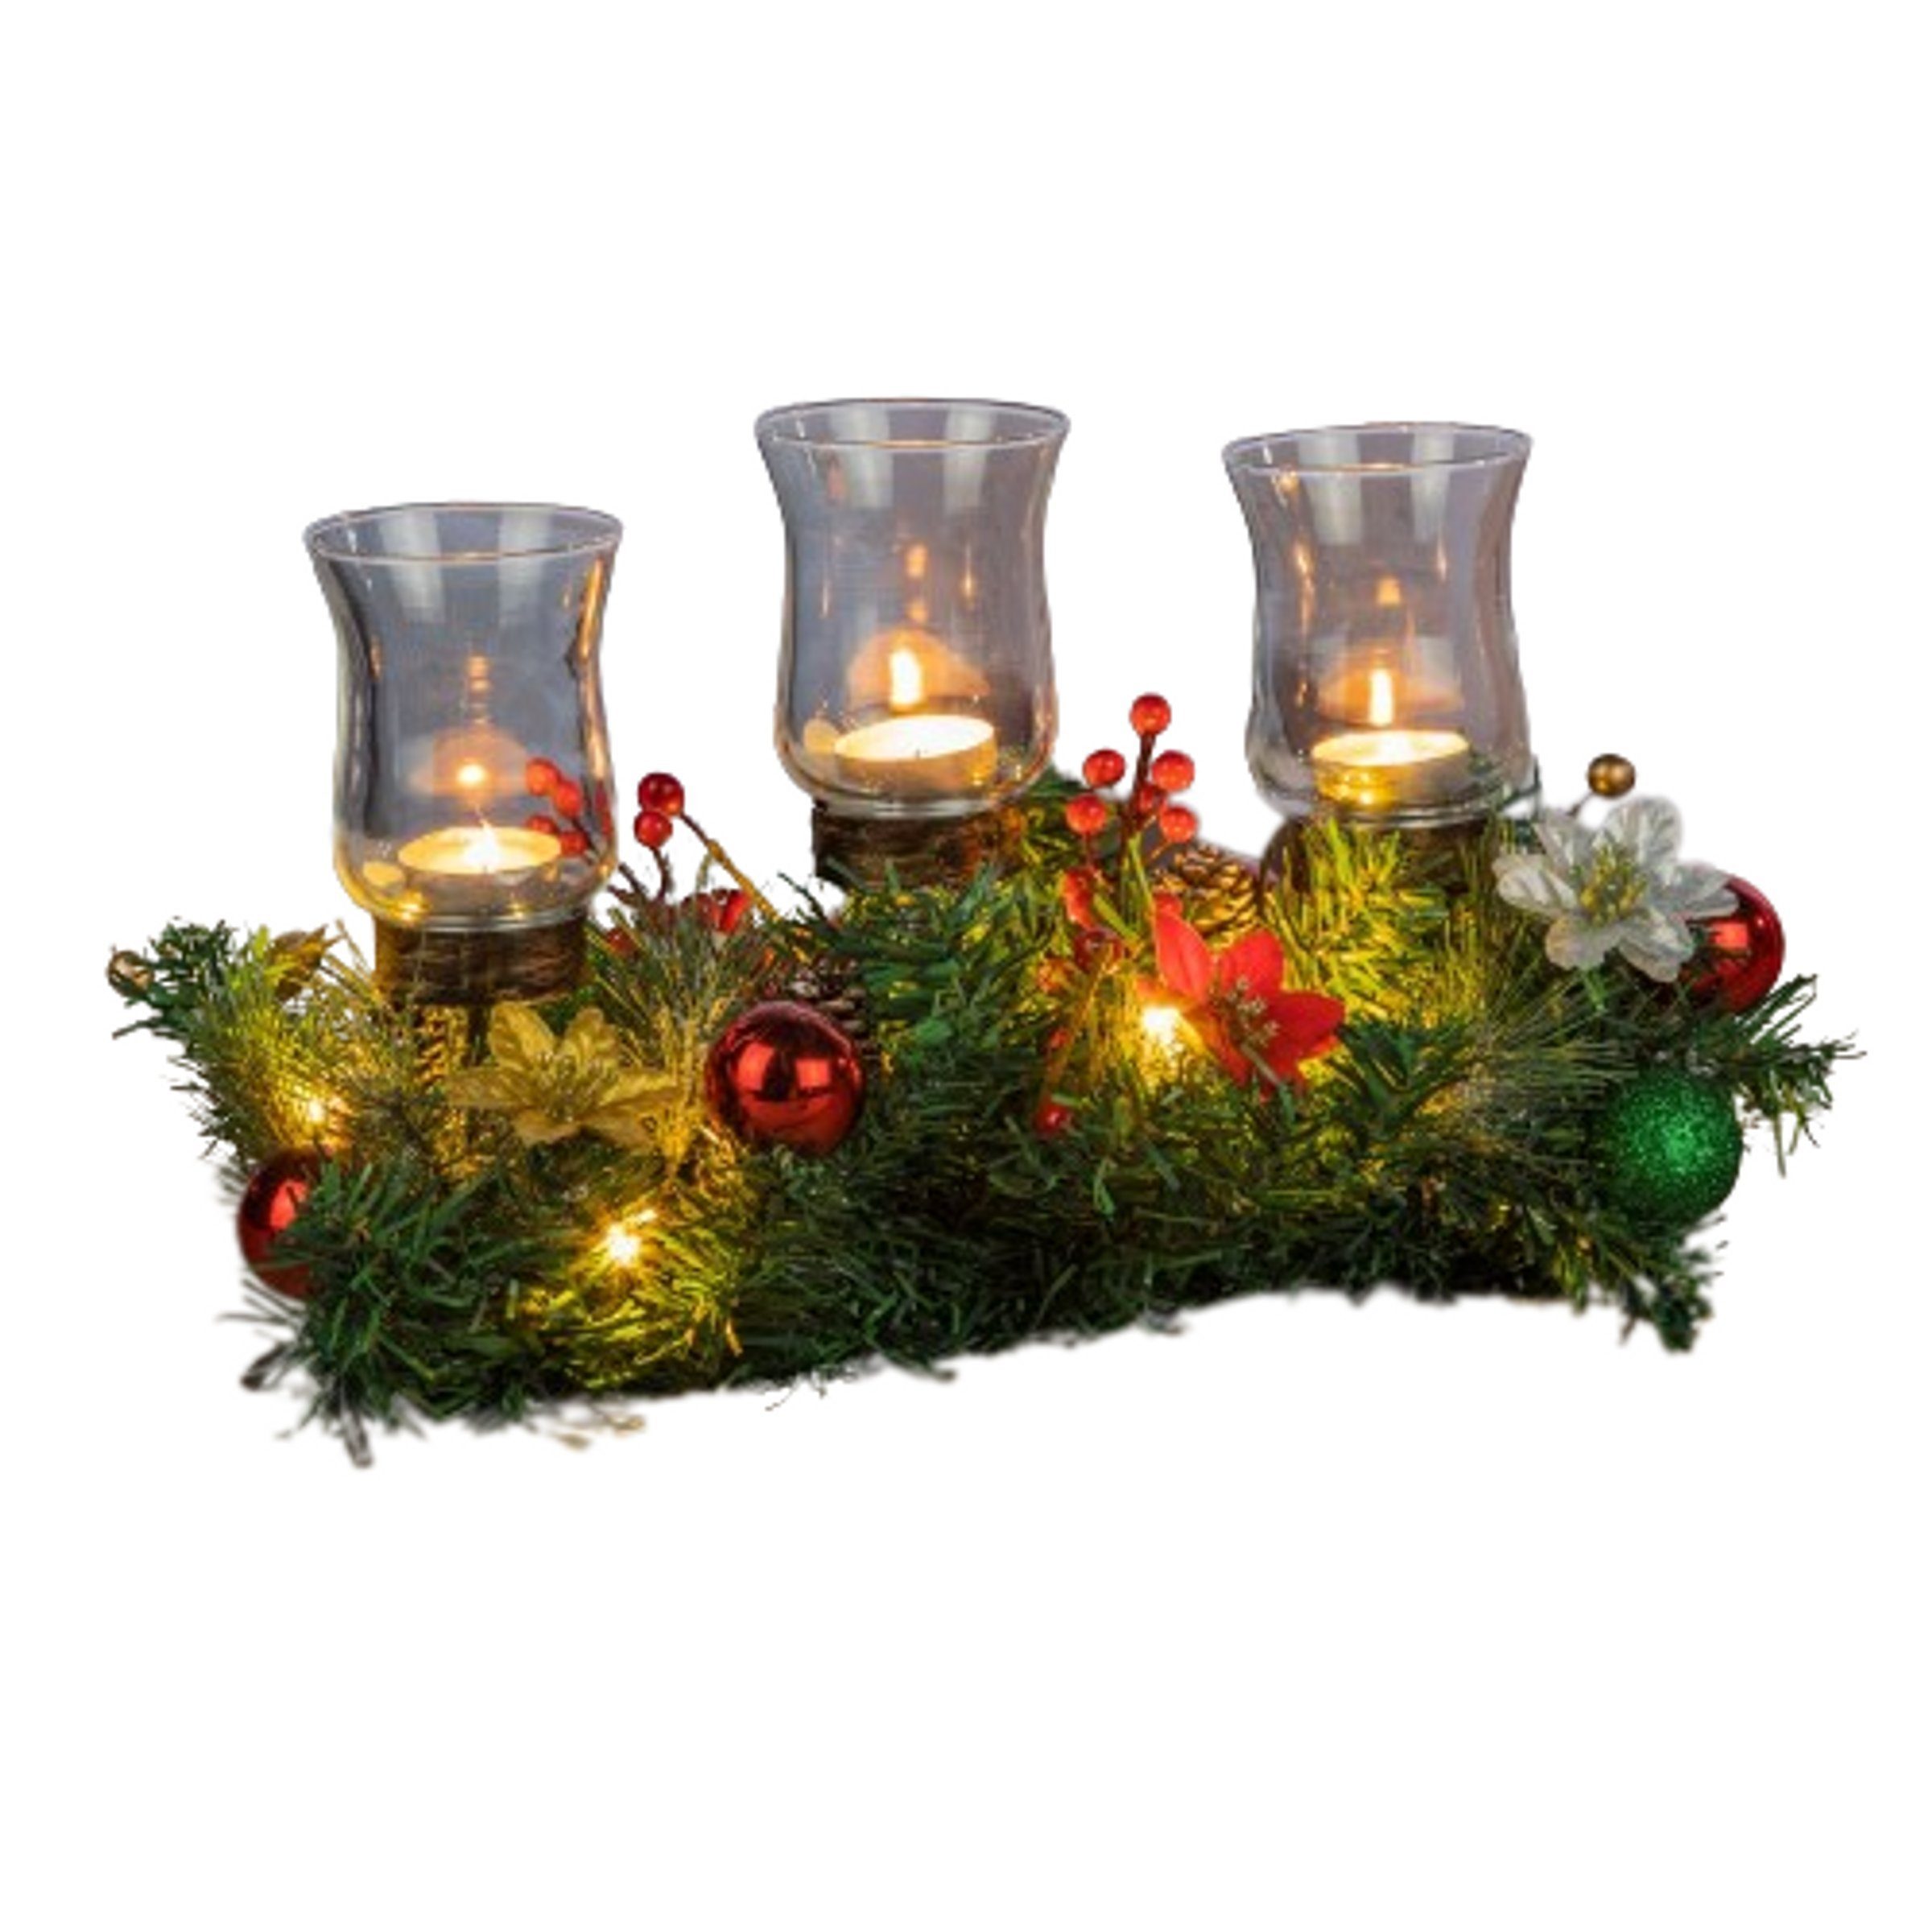 Weihnachten 6 Kerzen Gravidus Kerzenhalter Kerzenhalter 3 LED